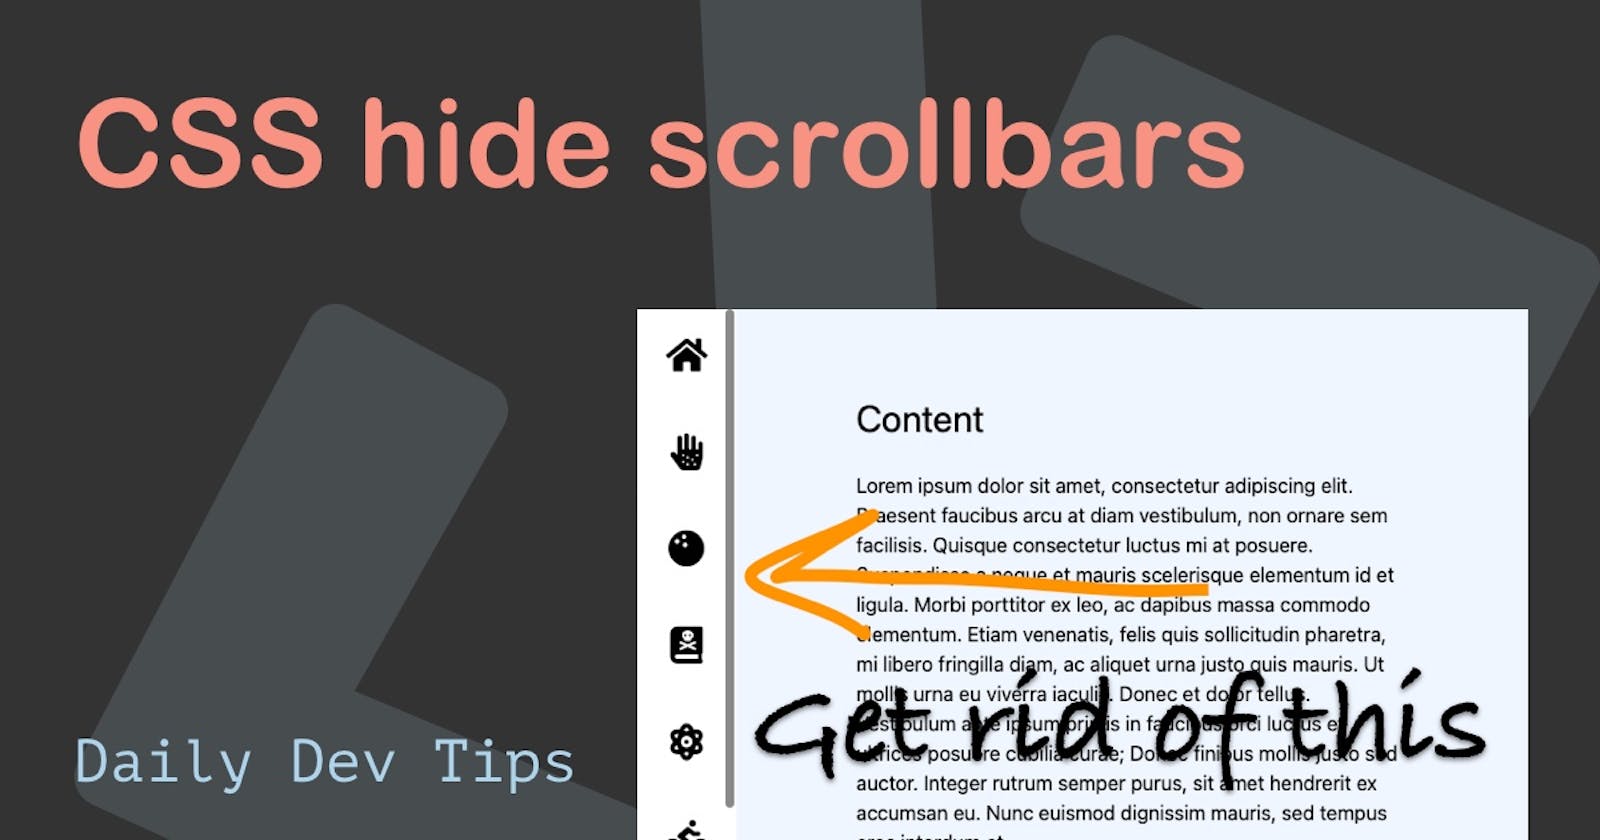 CSS hide scrollbars